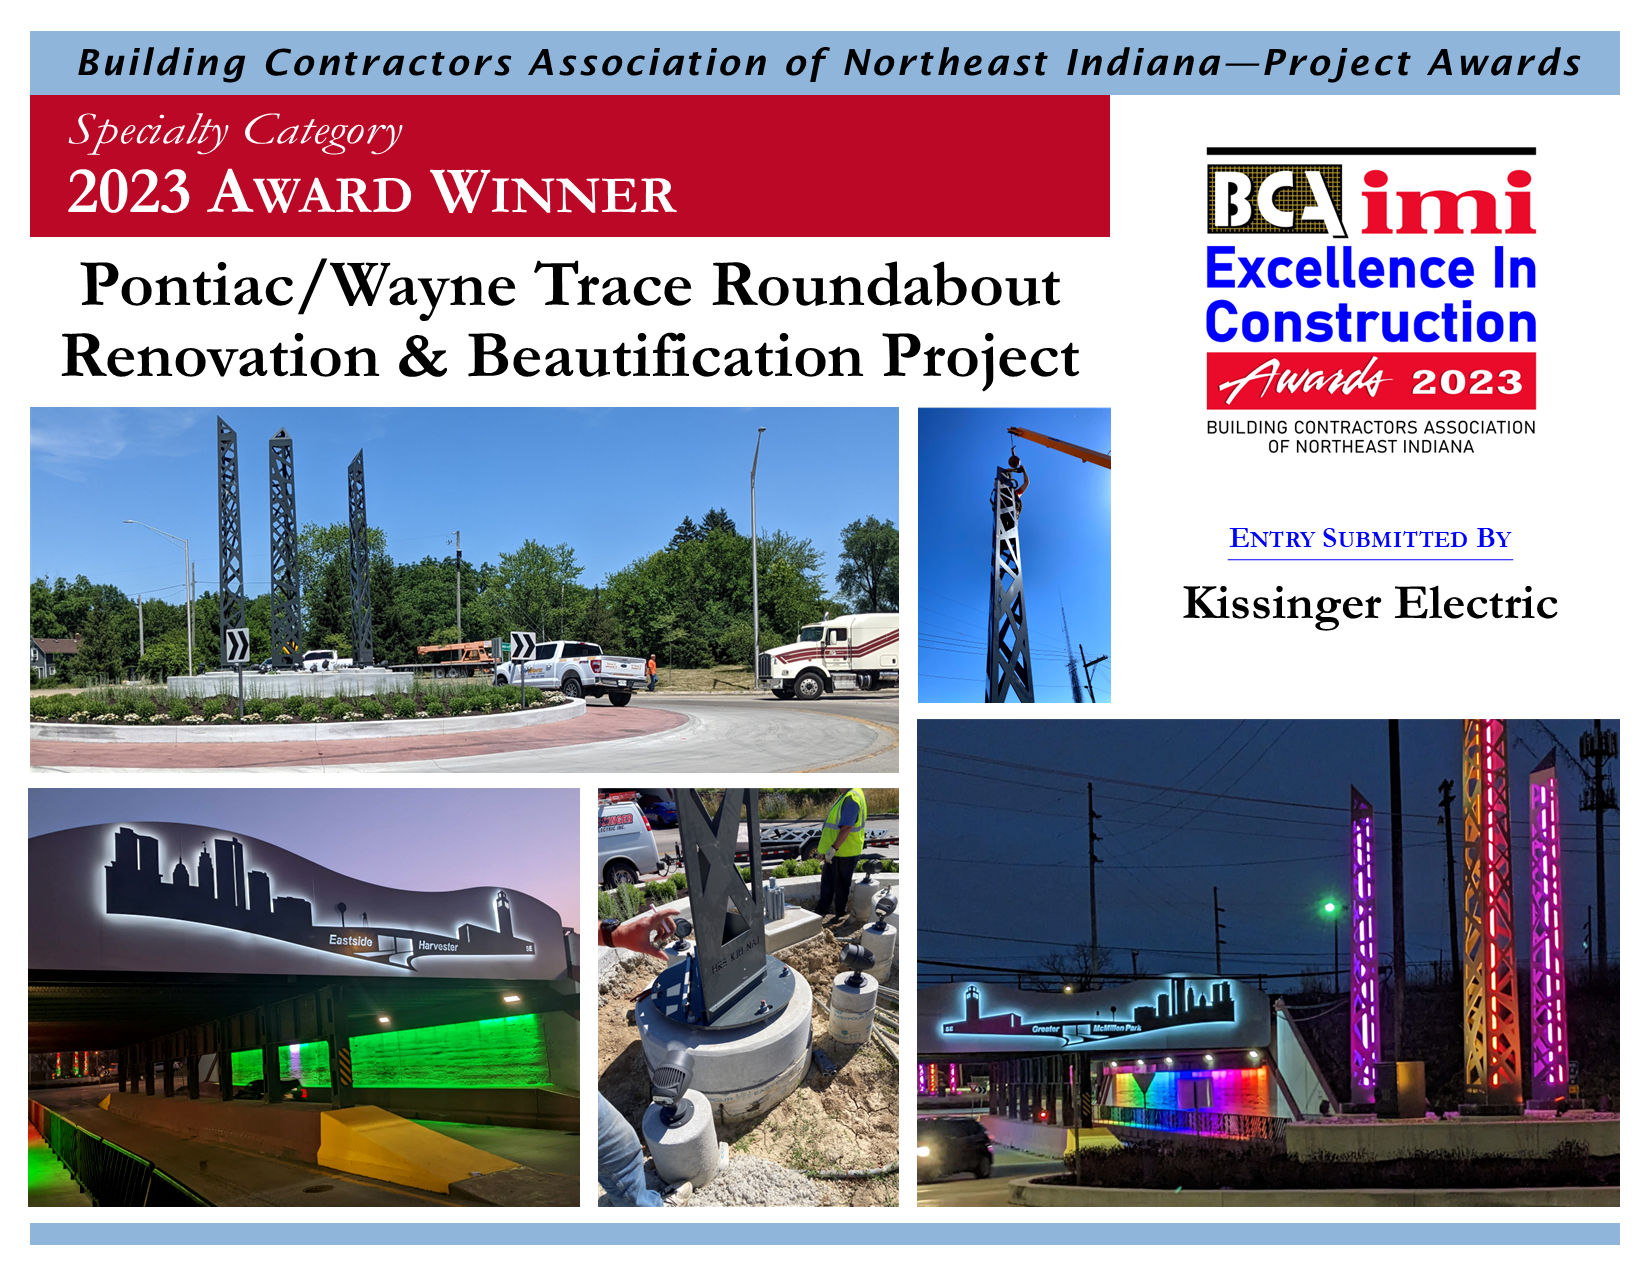 Pontiac Wayne Trace Roundabout